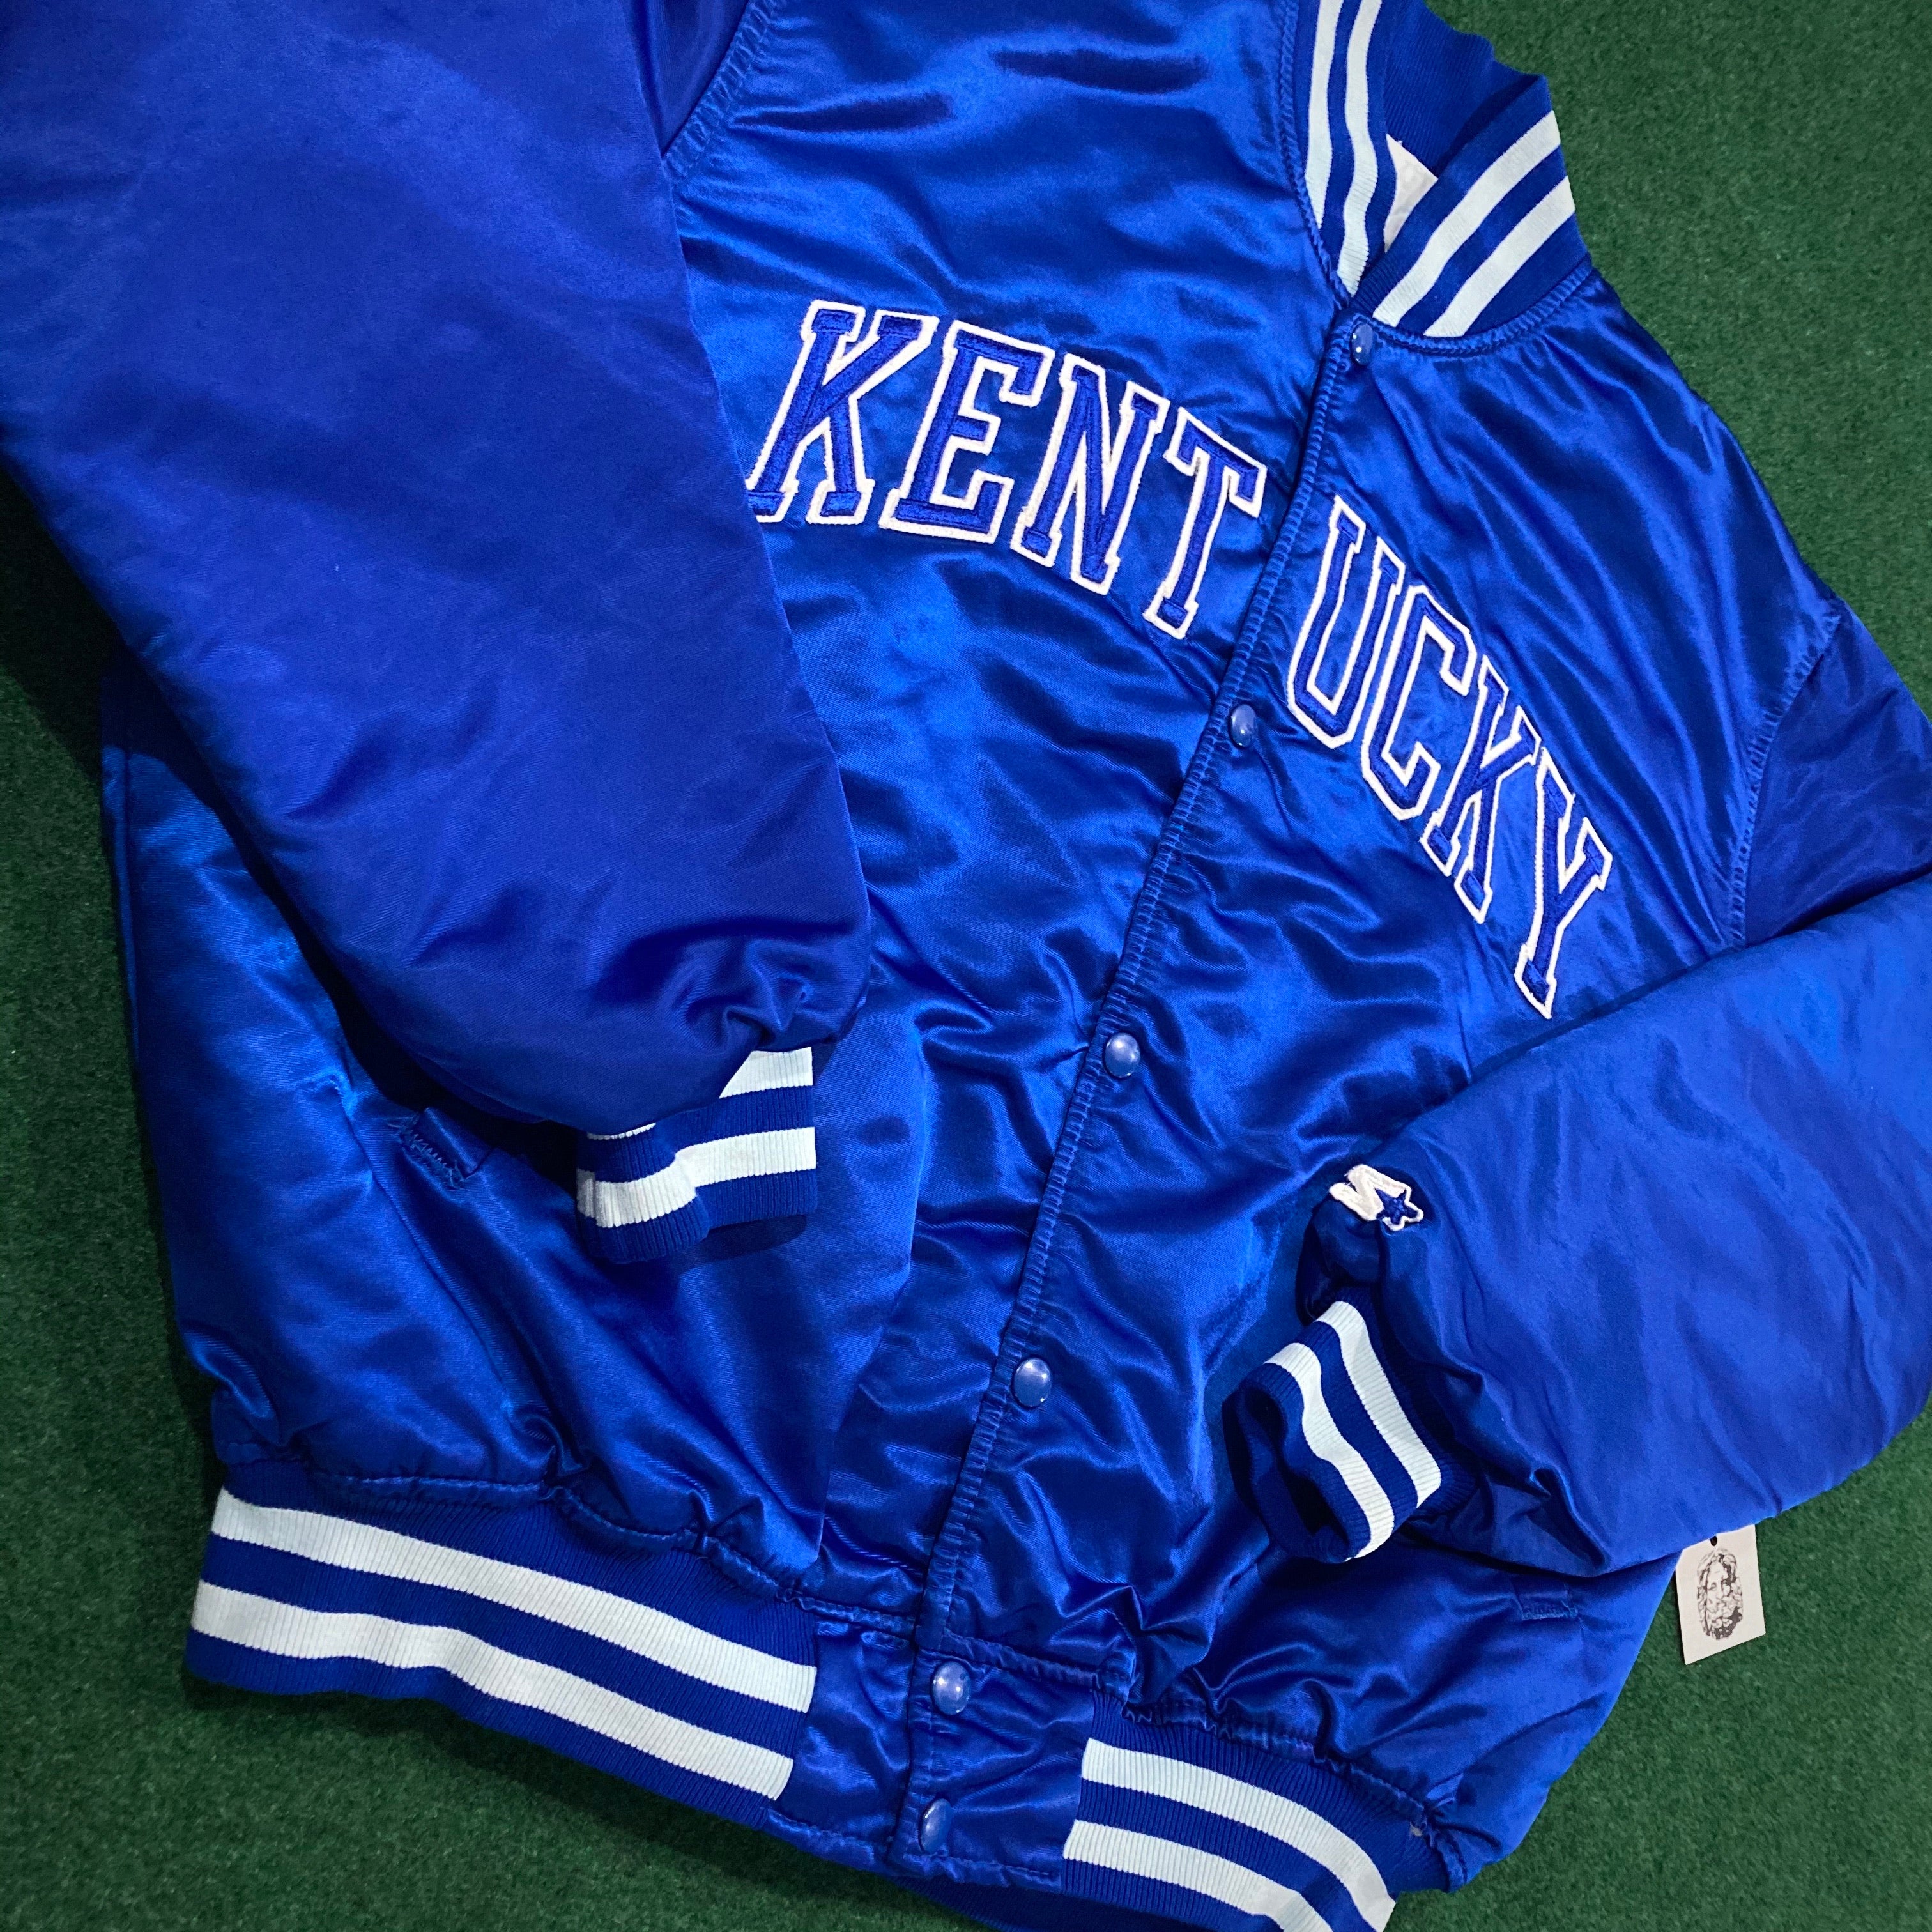 Vintage University of Kentucky Starter Jacket